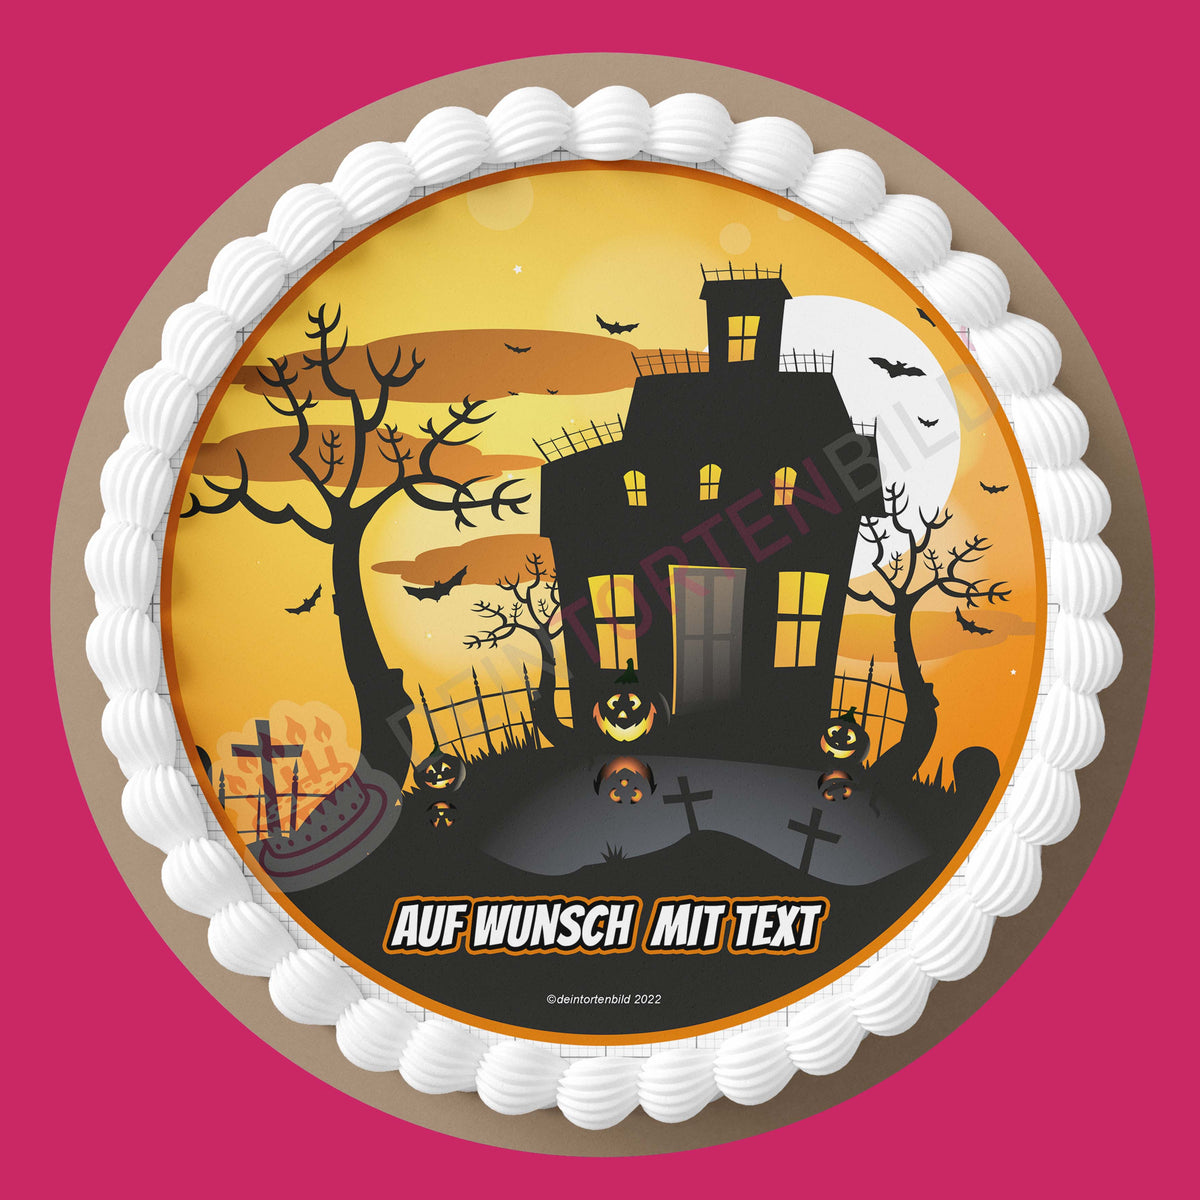 Halloween Haus - Deintortenbild.de Tortenaufleger aus Esspapier: Oblatenpapier, Zuckerpapier, Fondantpapier